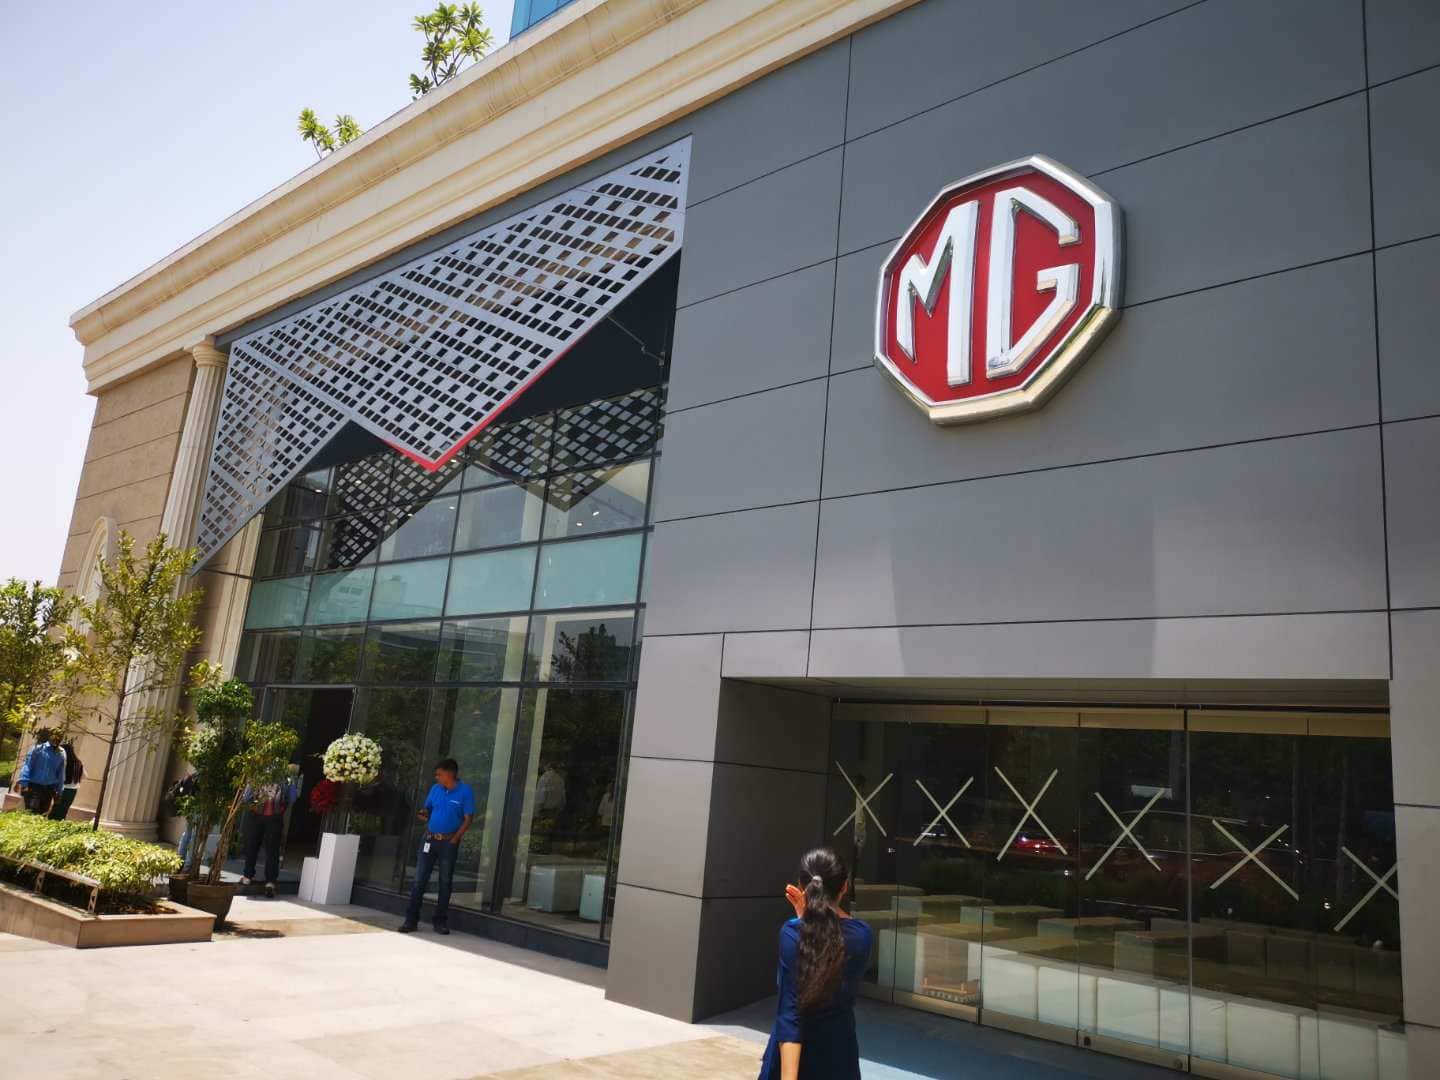 MG India experiences sales dip